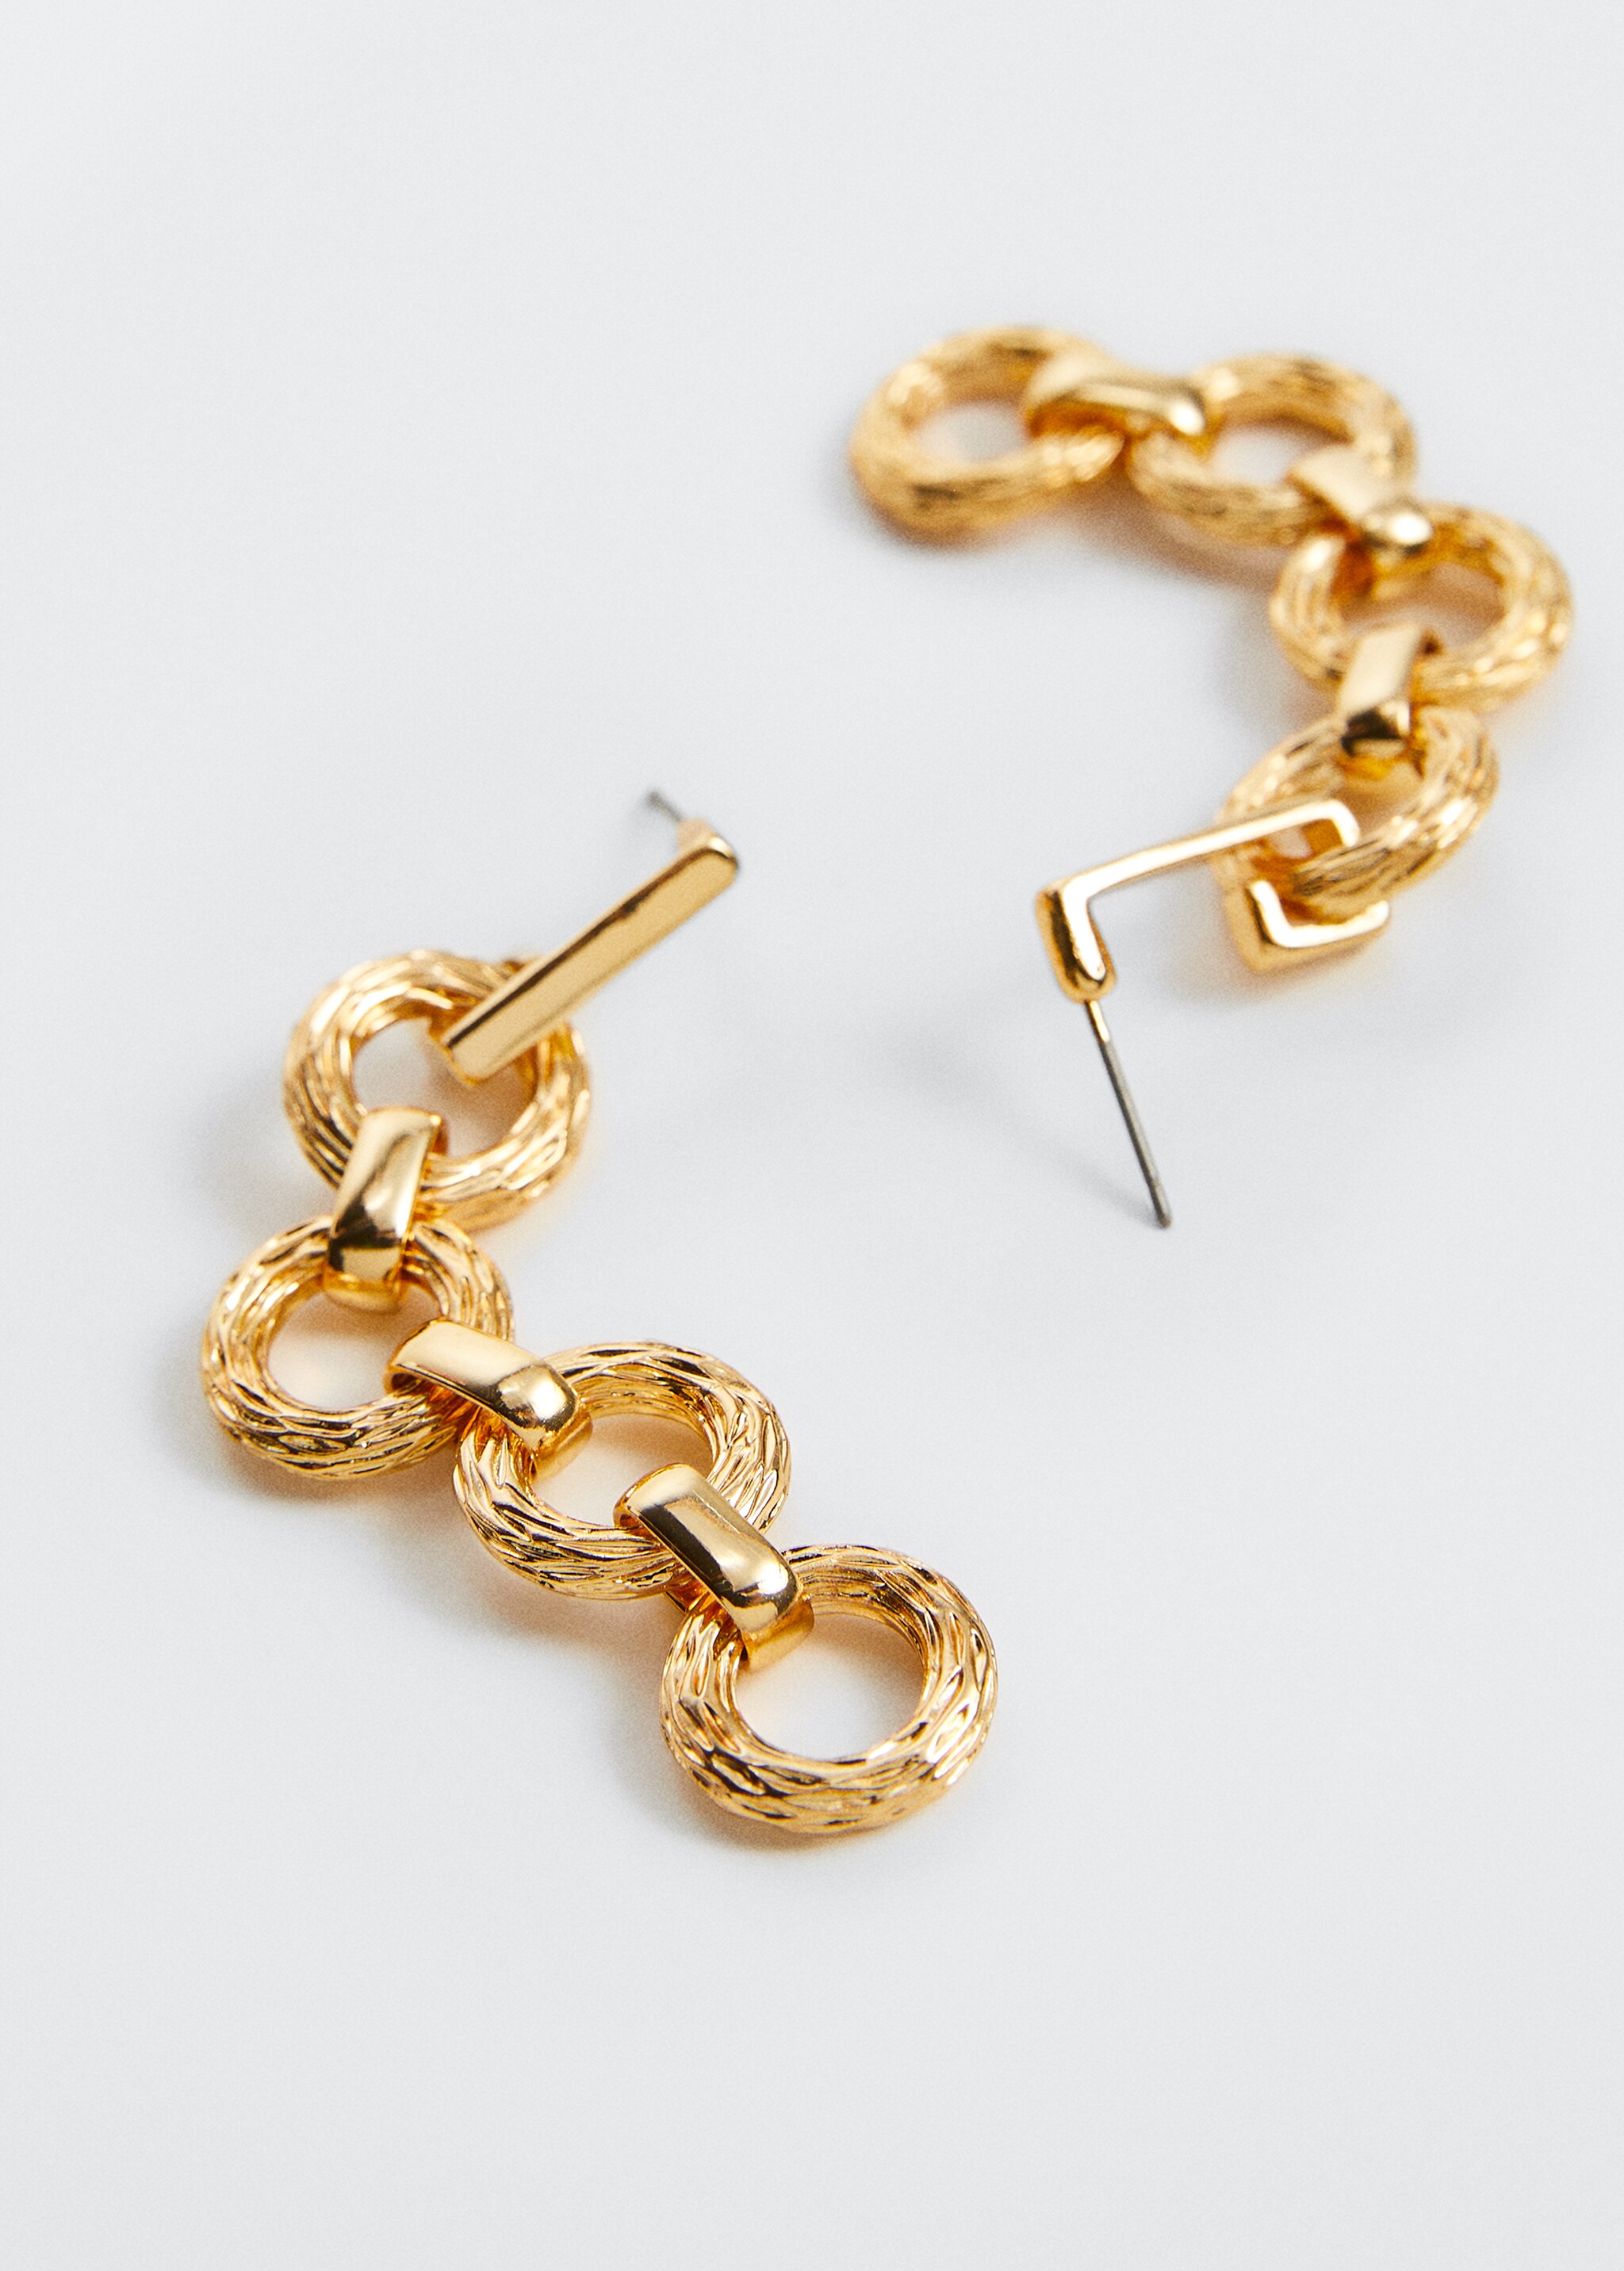 Chain pendant earrings - Medium plane